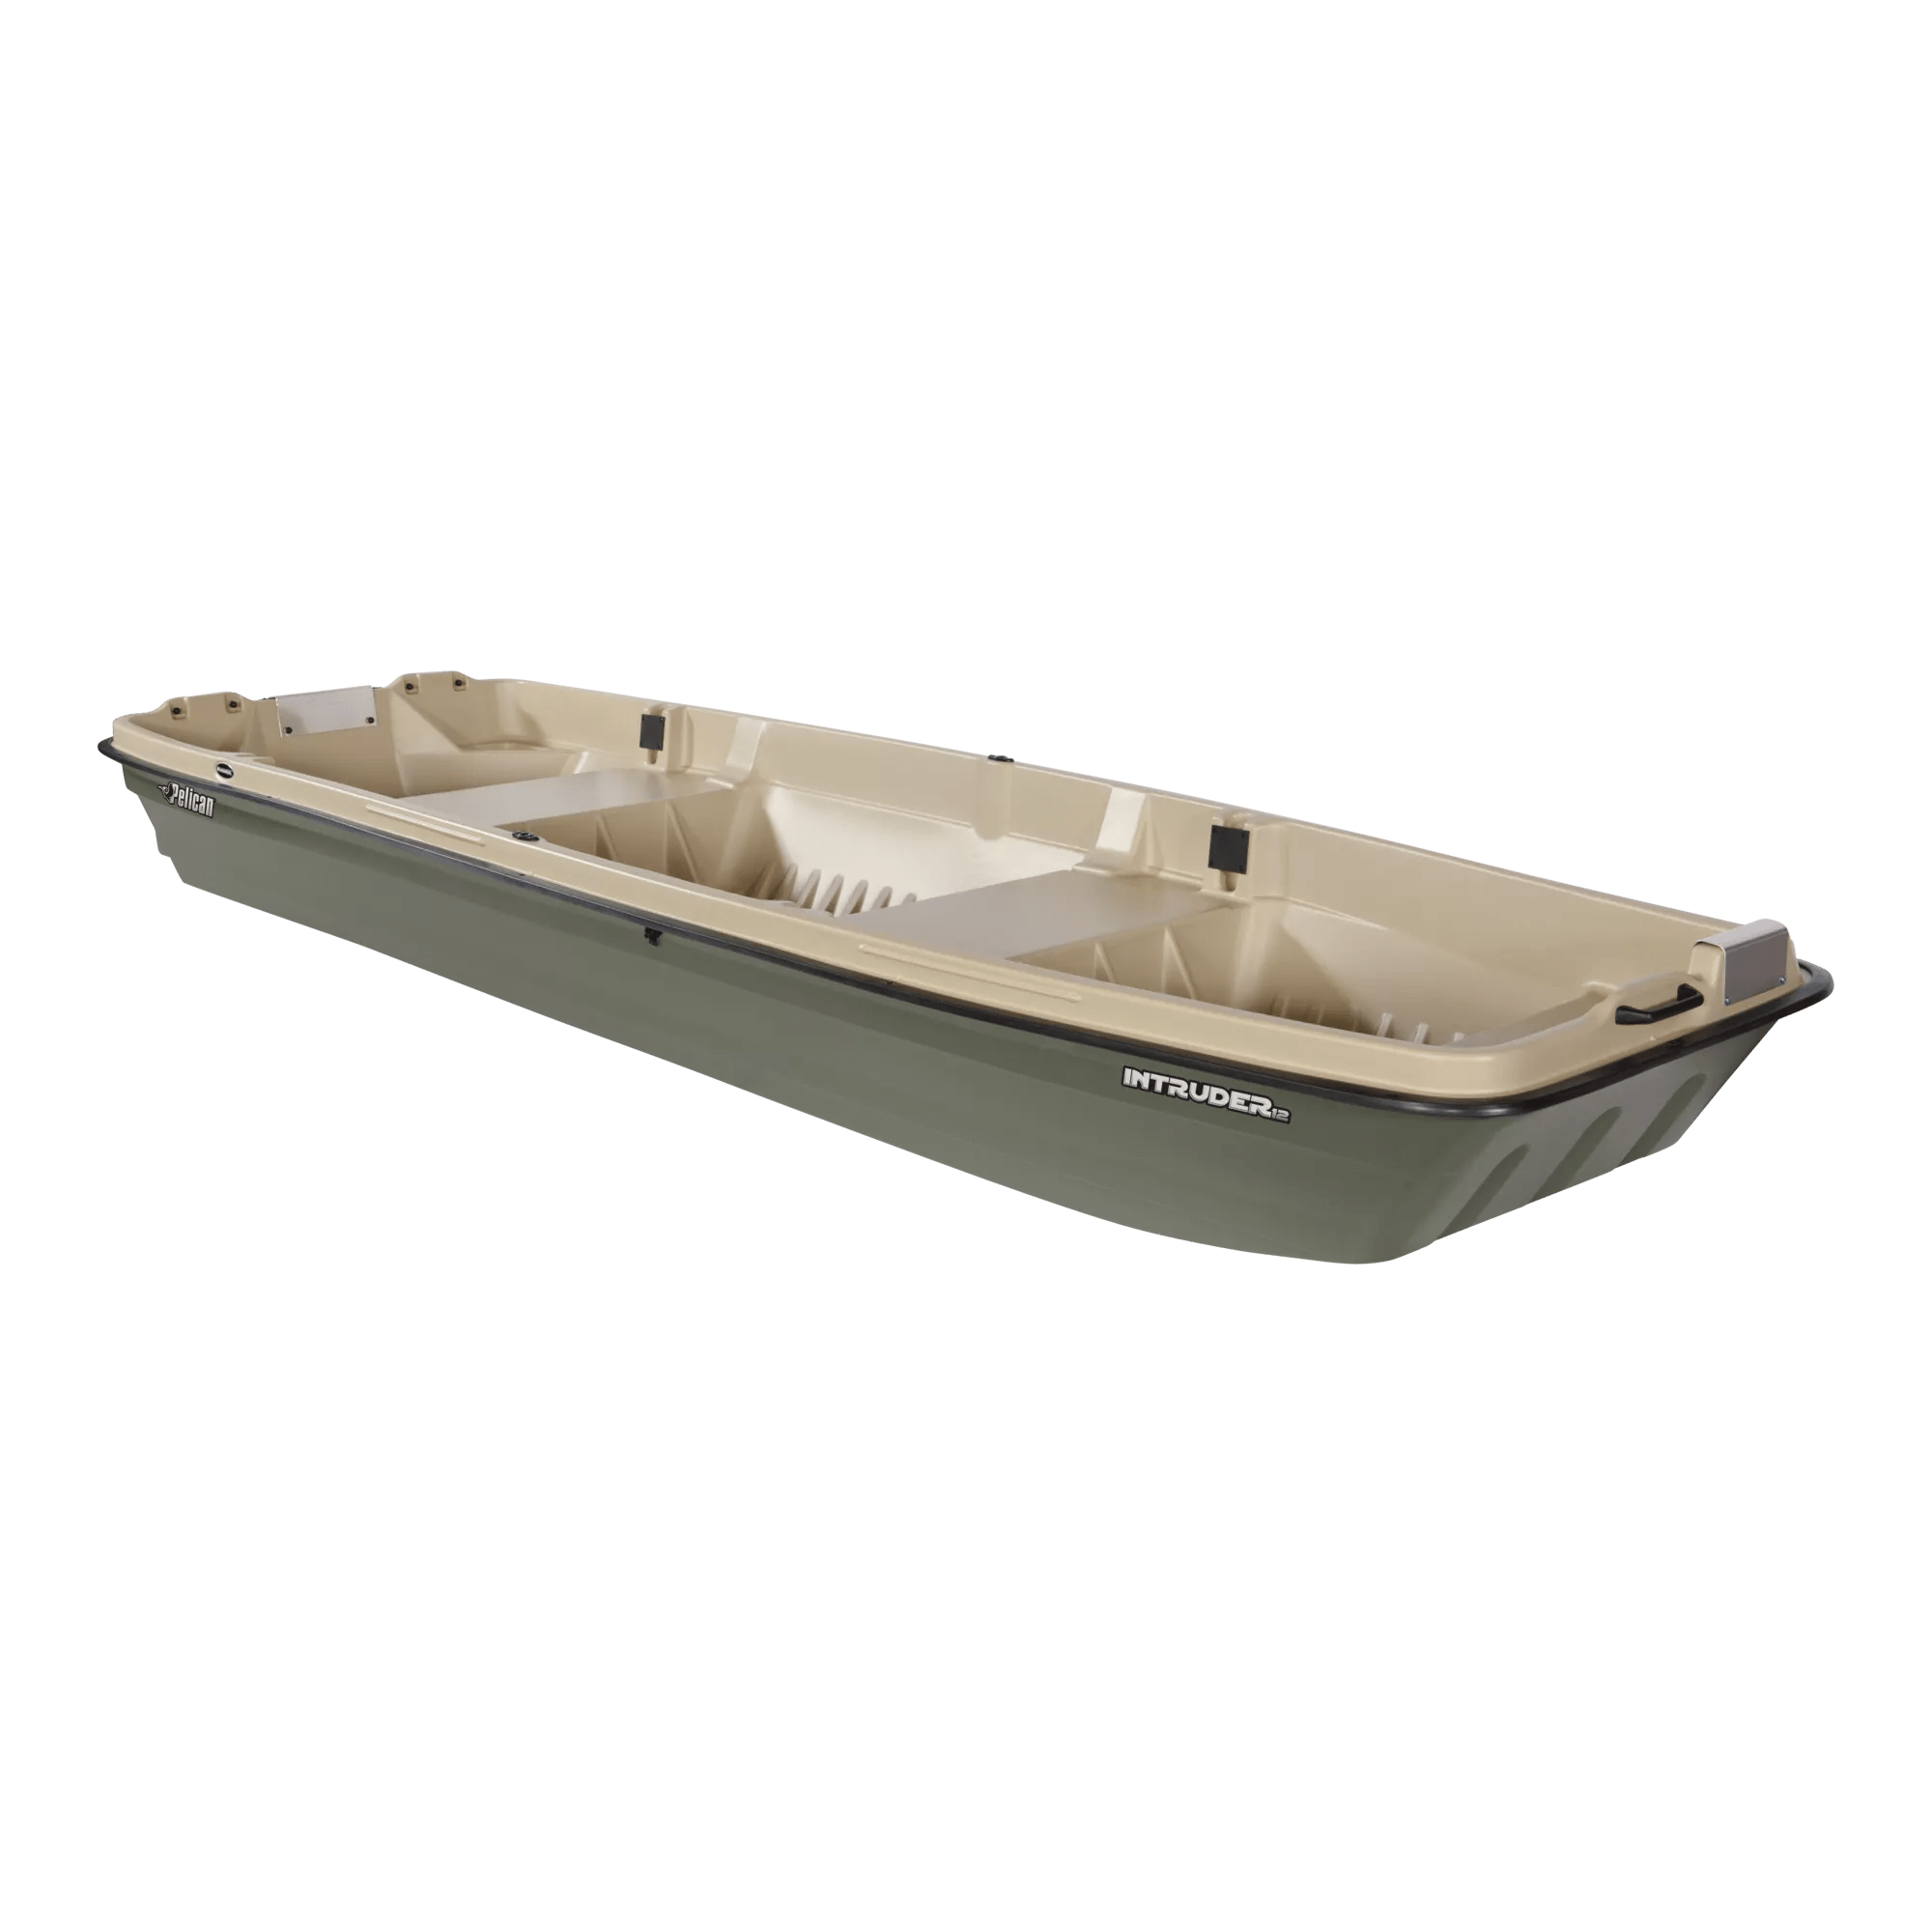 PELICAN - Intruder 12 Fishing Boat - Green - BJA12P105-00 - ISO 